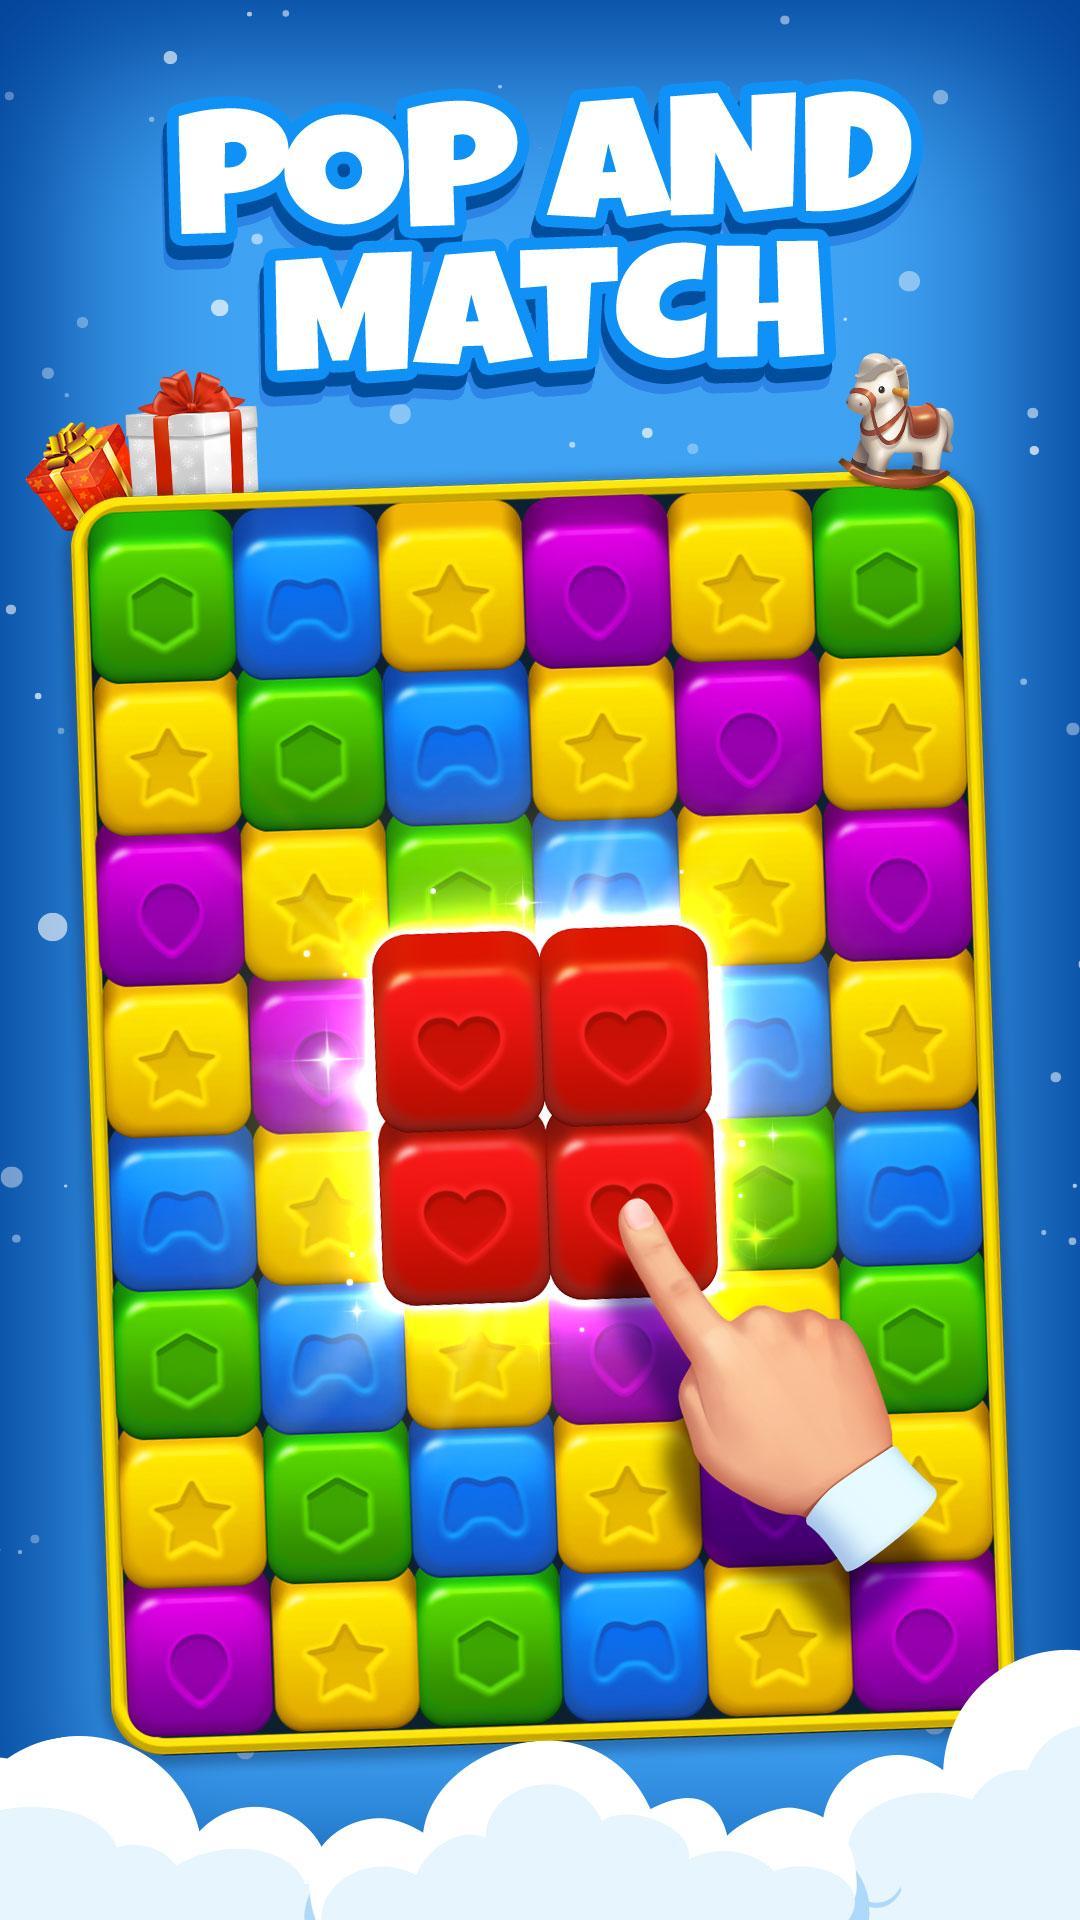 Toy Brick Crush Relaxing Matching Puzzle Game 1.5.0 Screenshot 1